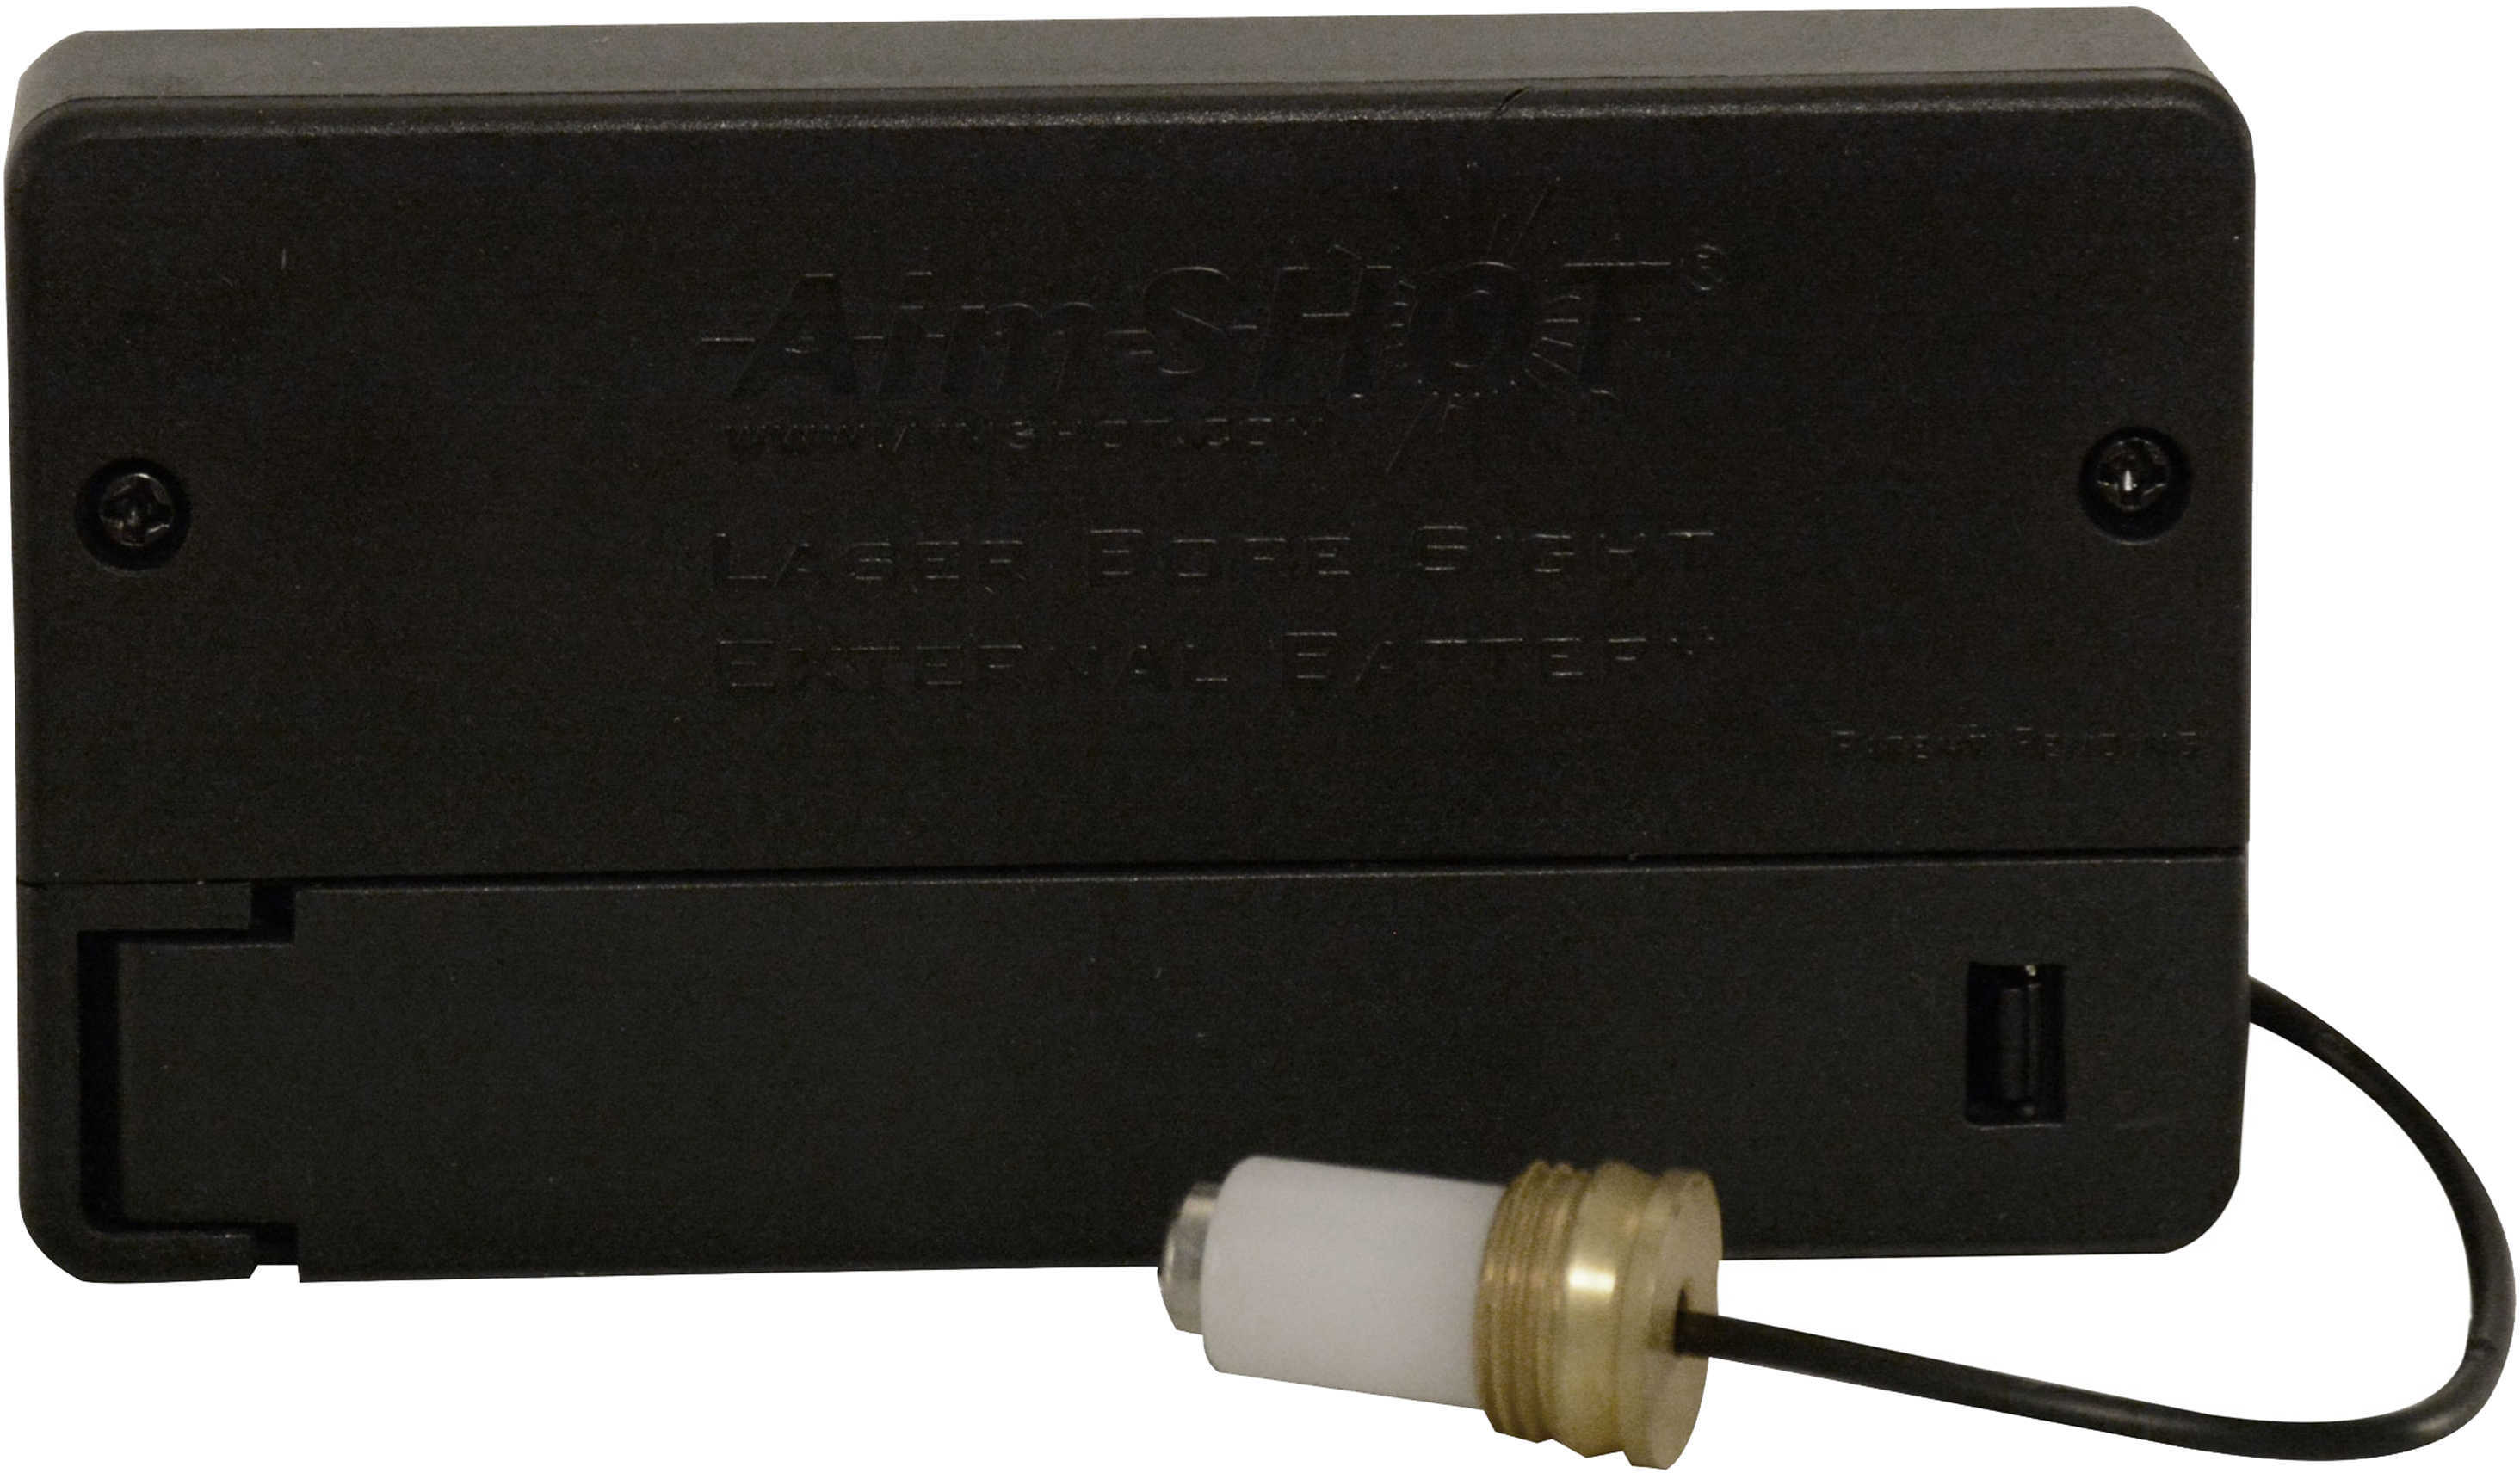 Aimshot Modular Battery Pack Upgrade For BS223/204 Md: MBP223